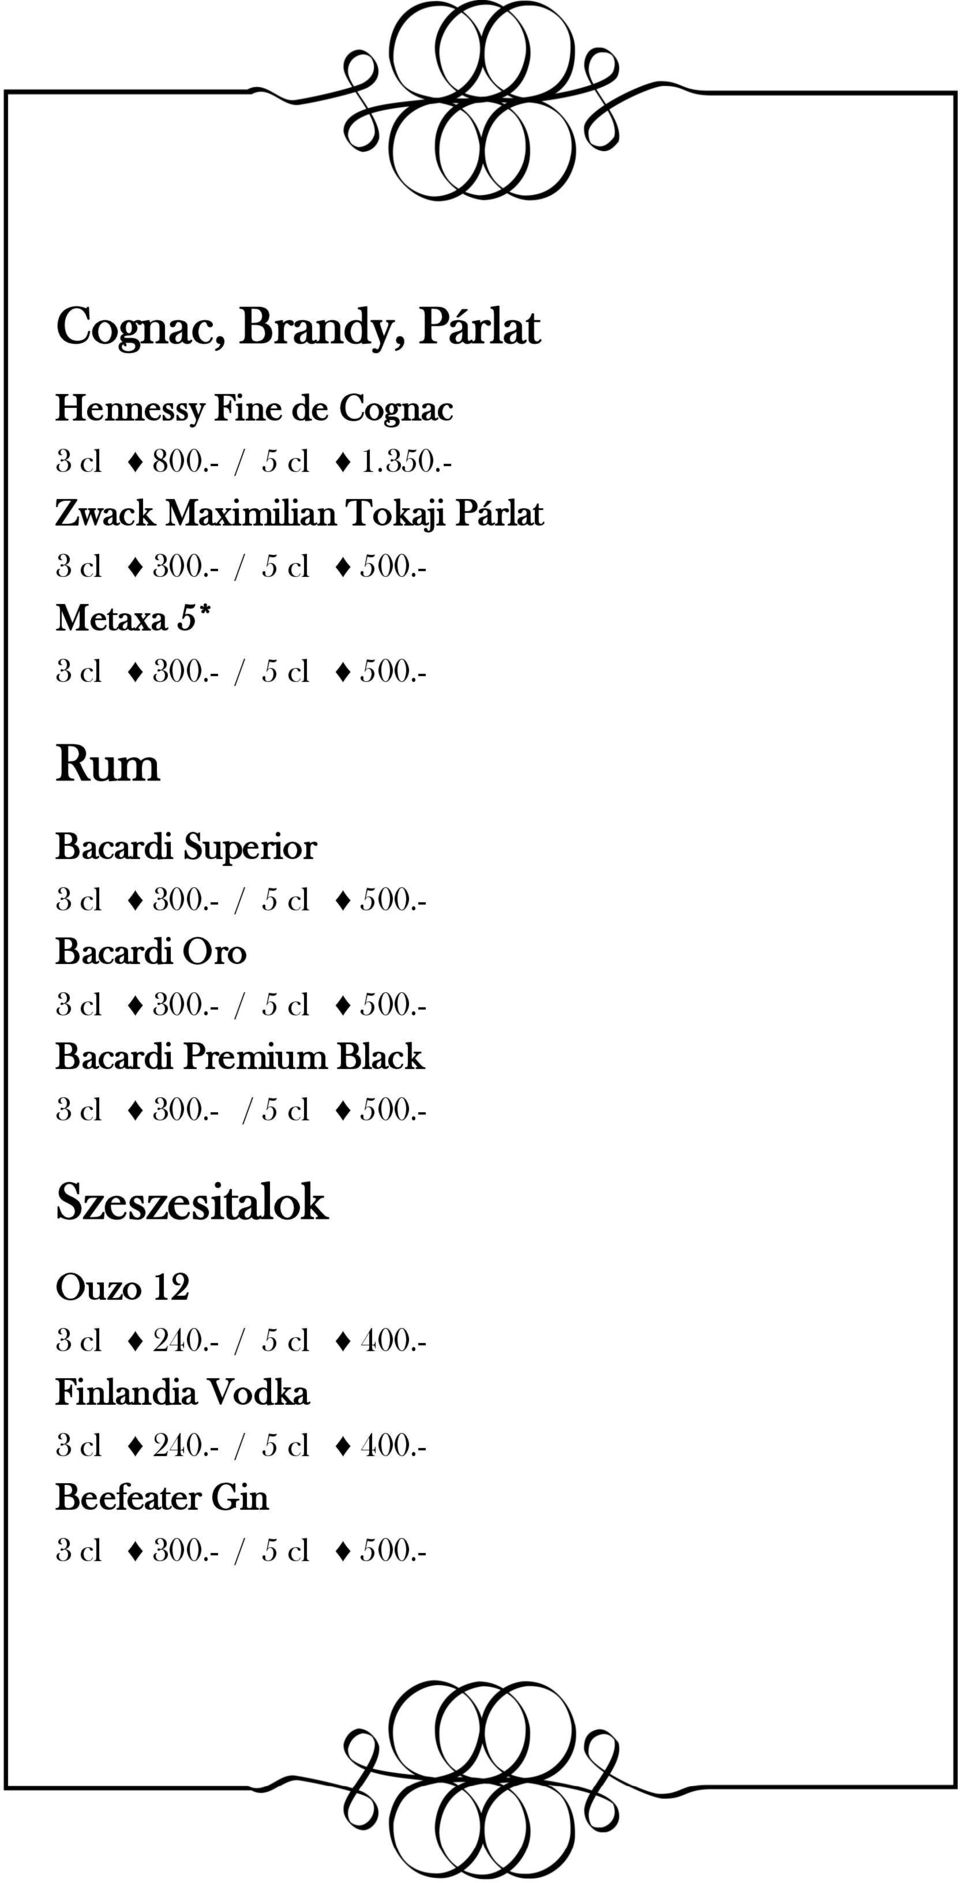 Superior Bacardi Oro Bacardi Premium Black Szeszesitalok Ouzo 12 3